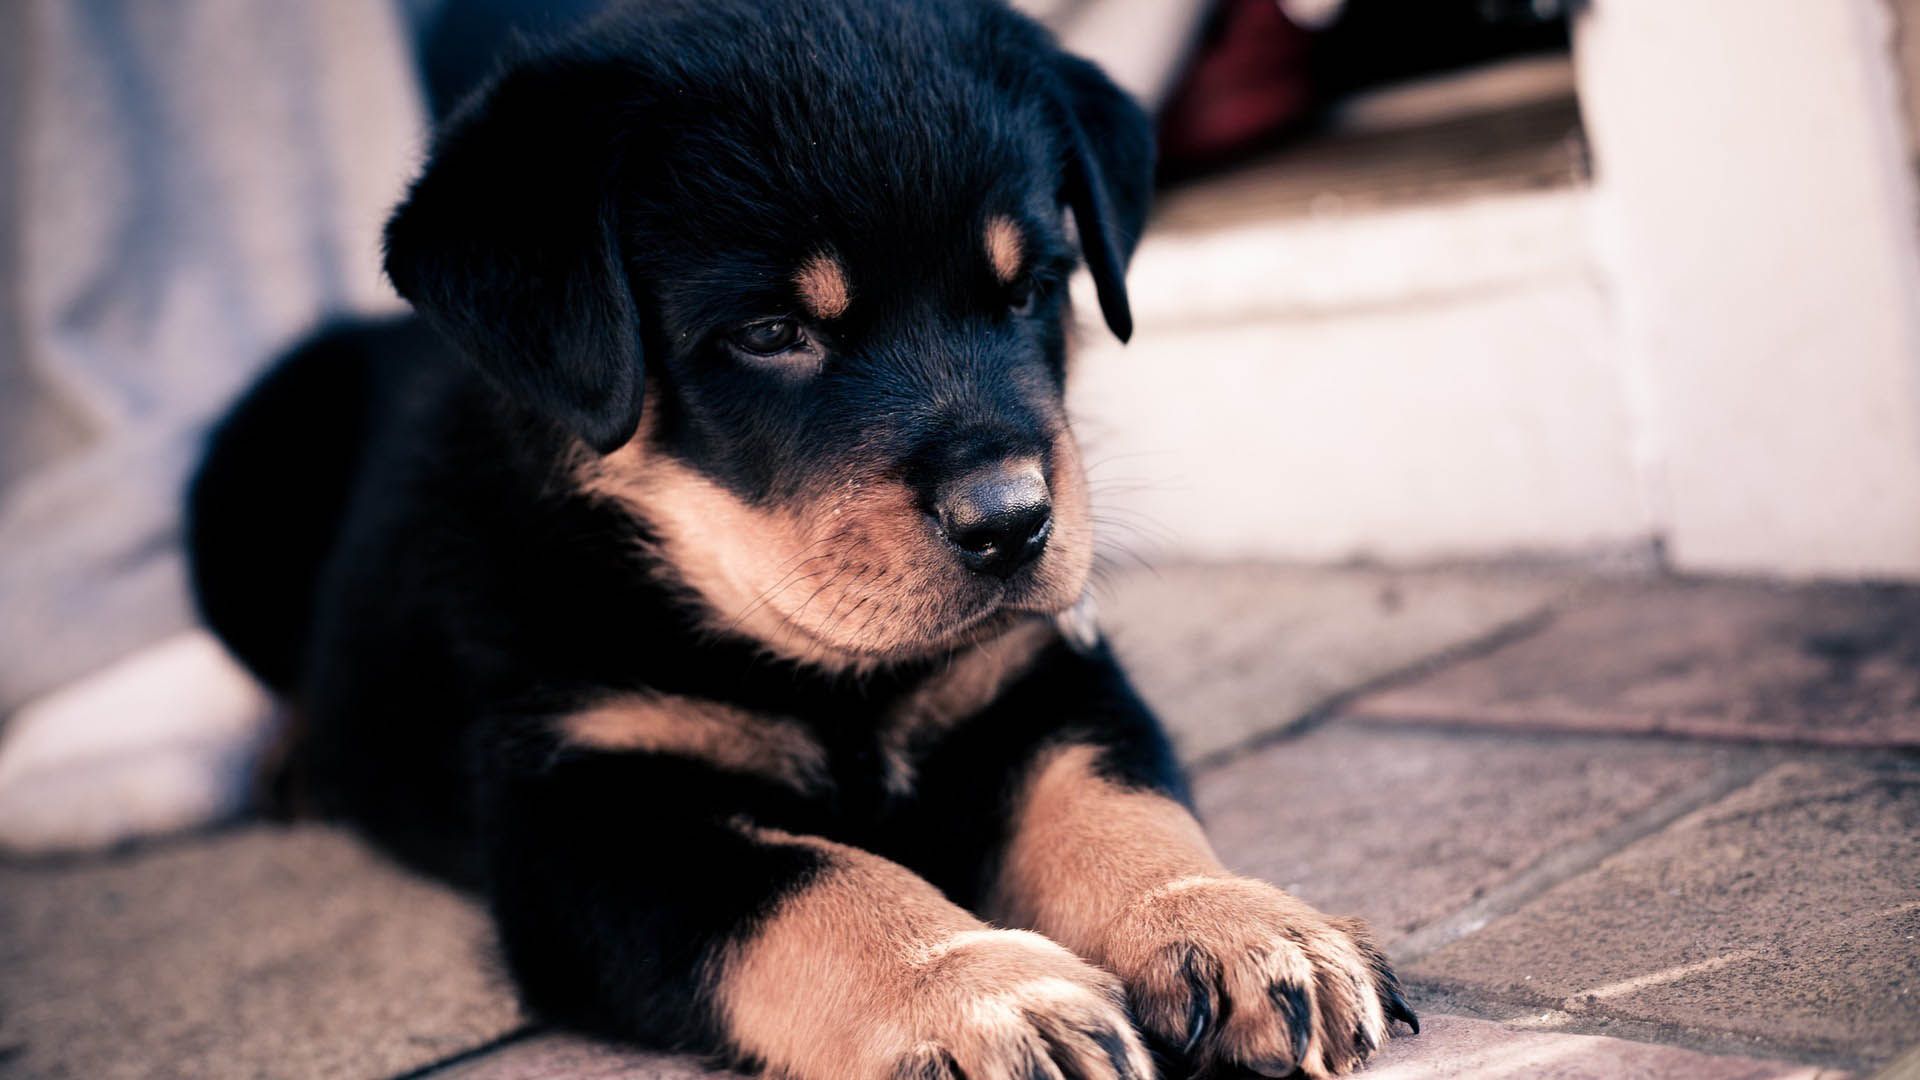 Cute Baby Dog Wallpaper Images - Ndemok.com